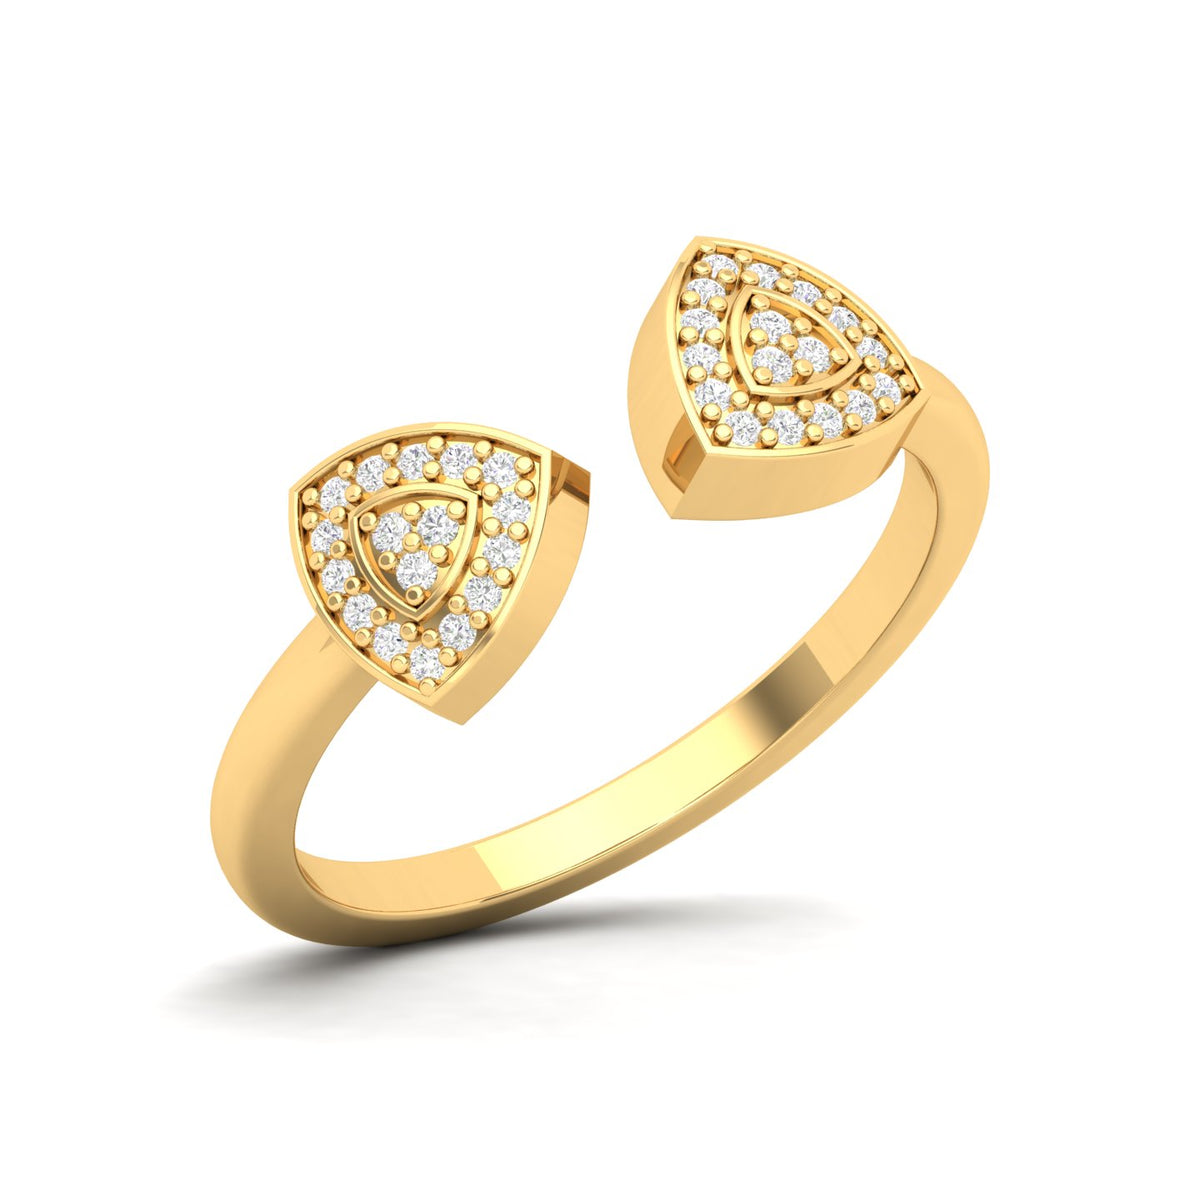 Maurya Troth Open Ring with Round Diamonds